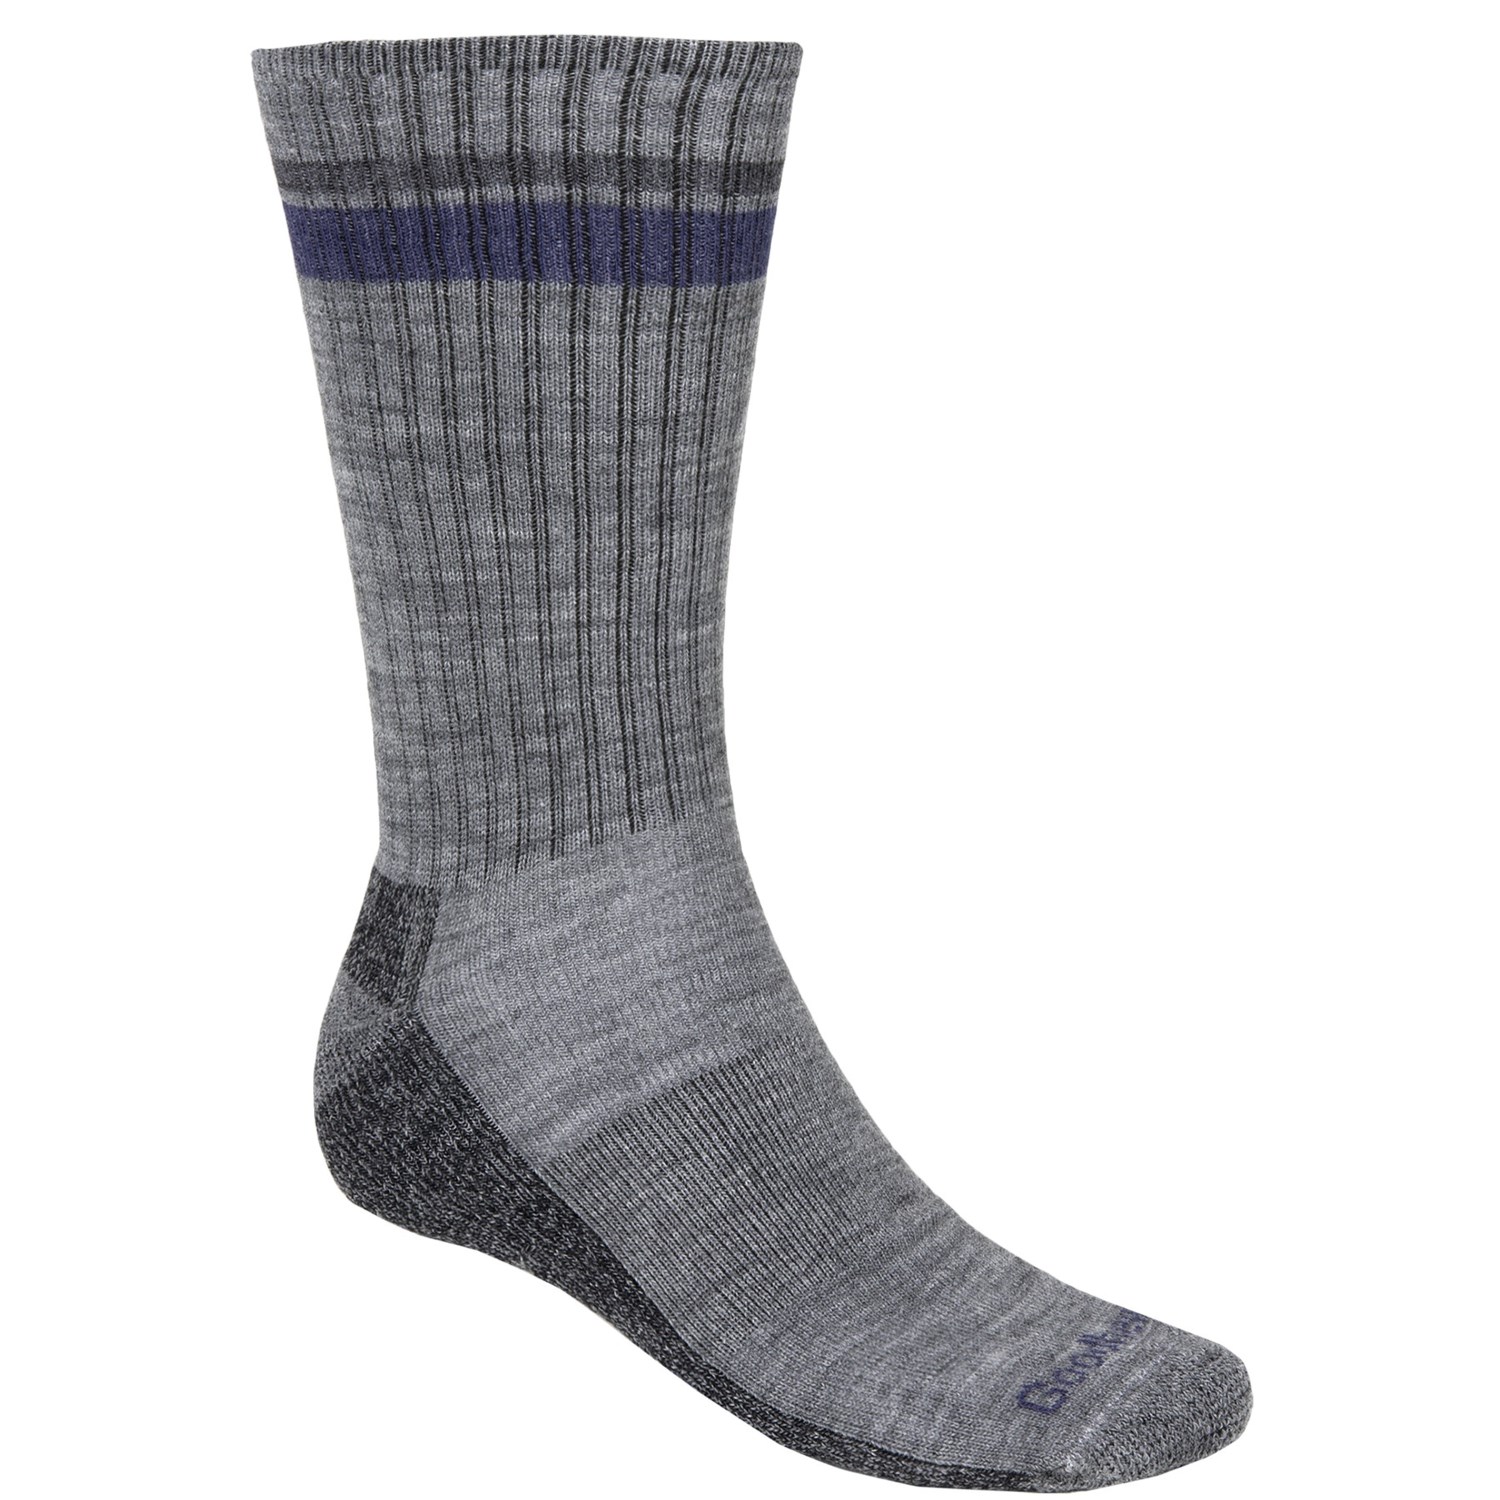 Goodhew Hudson Bay Socks - Merino Wool-Alpaca, Crew (For Men) - Save 33%